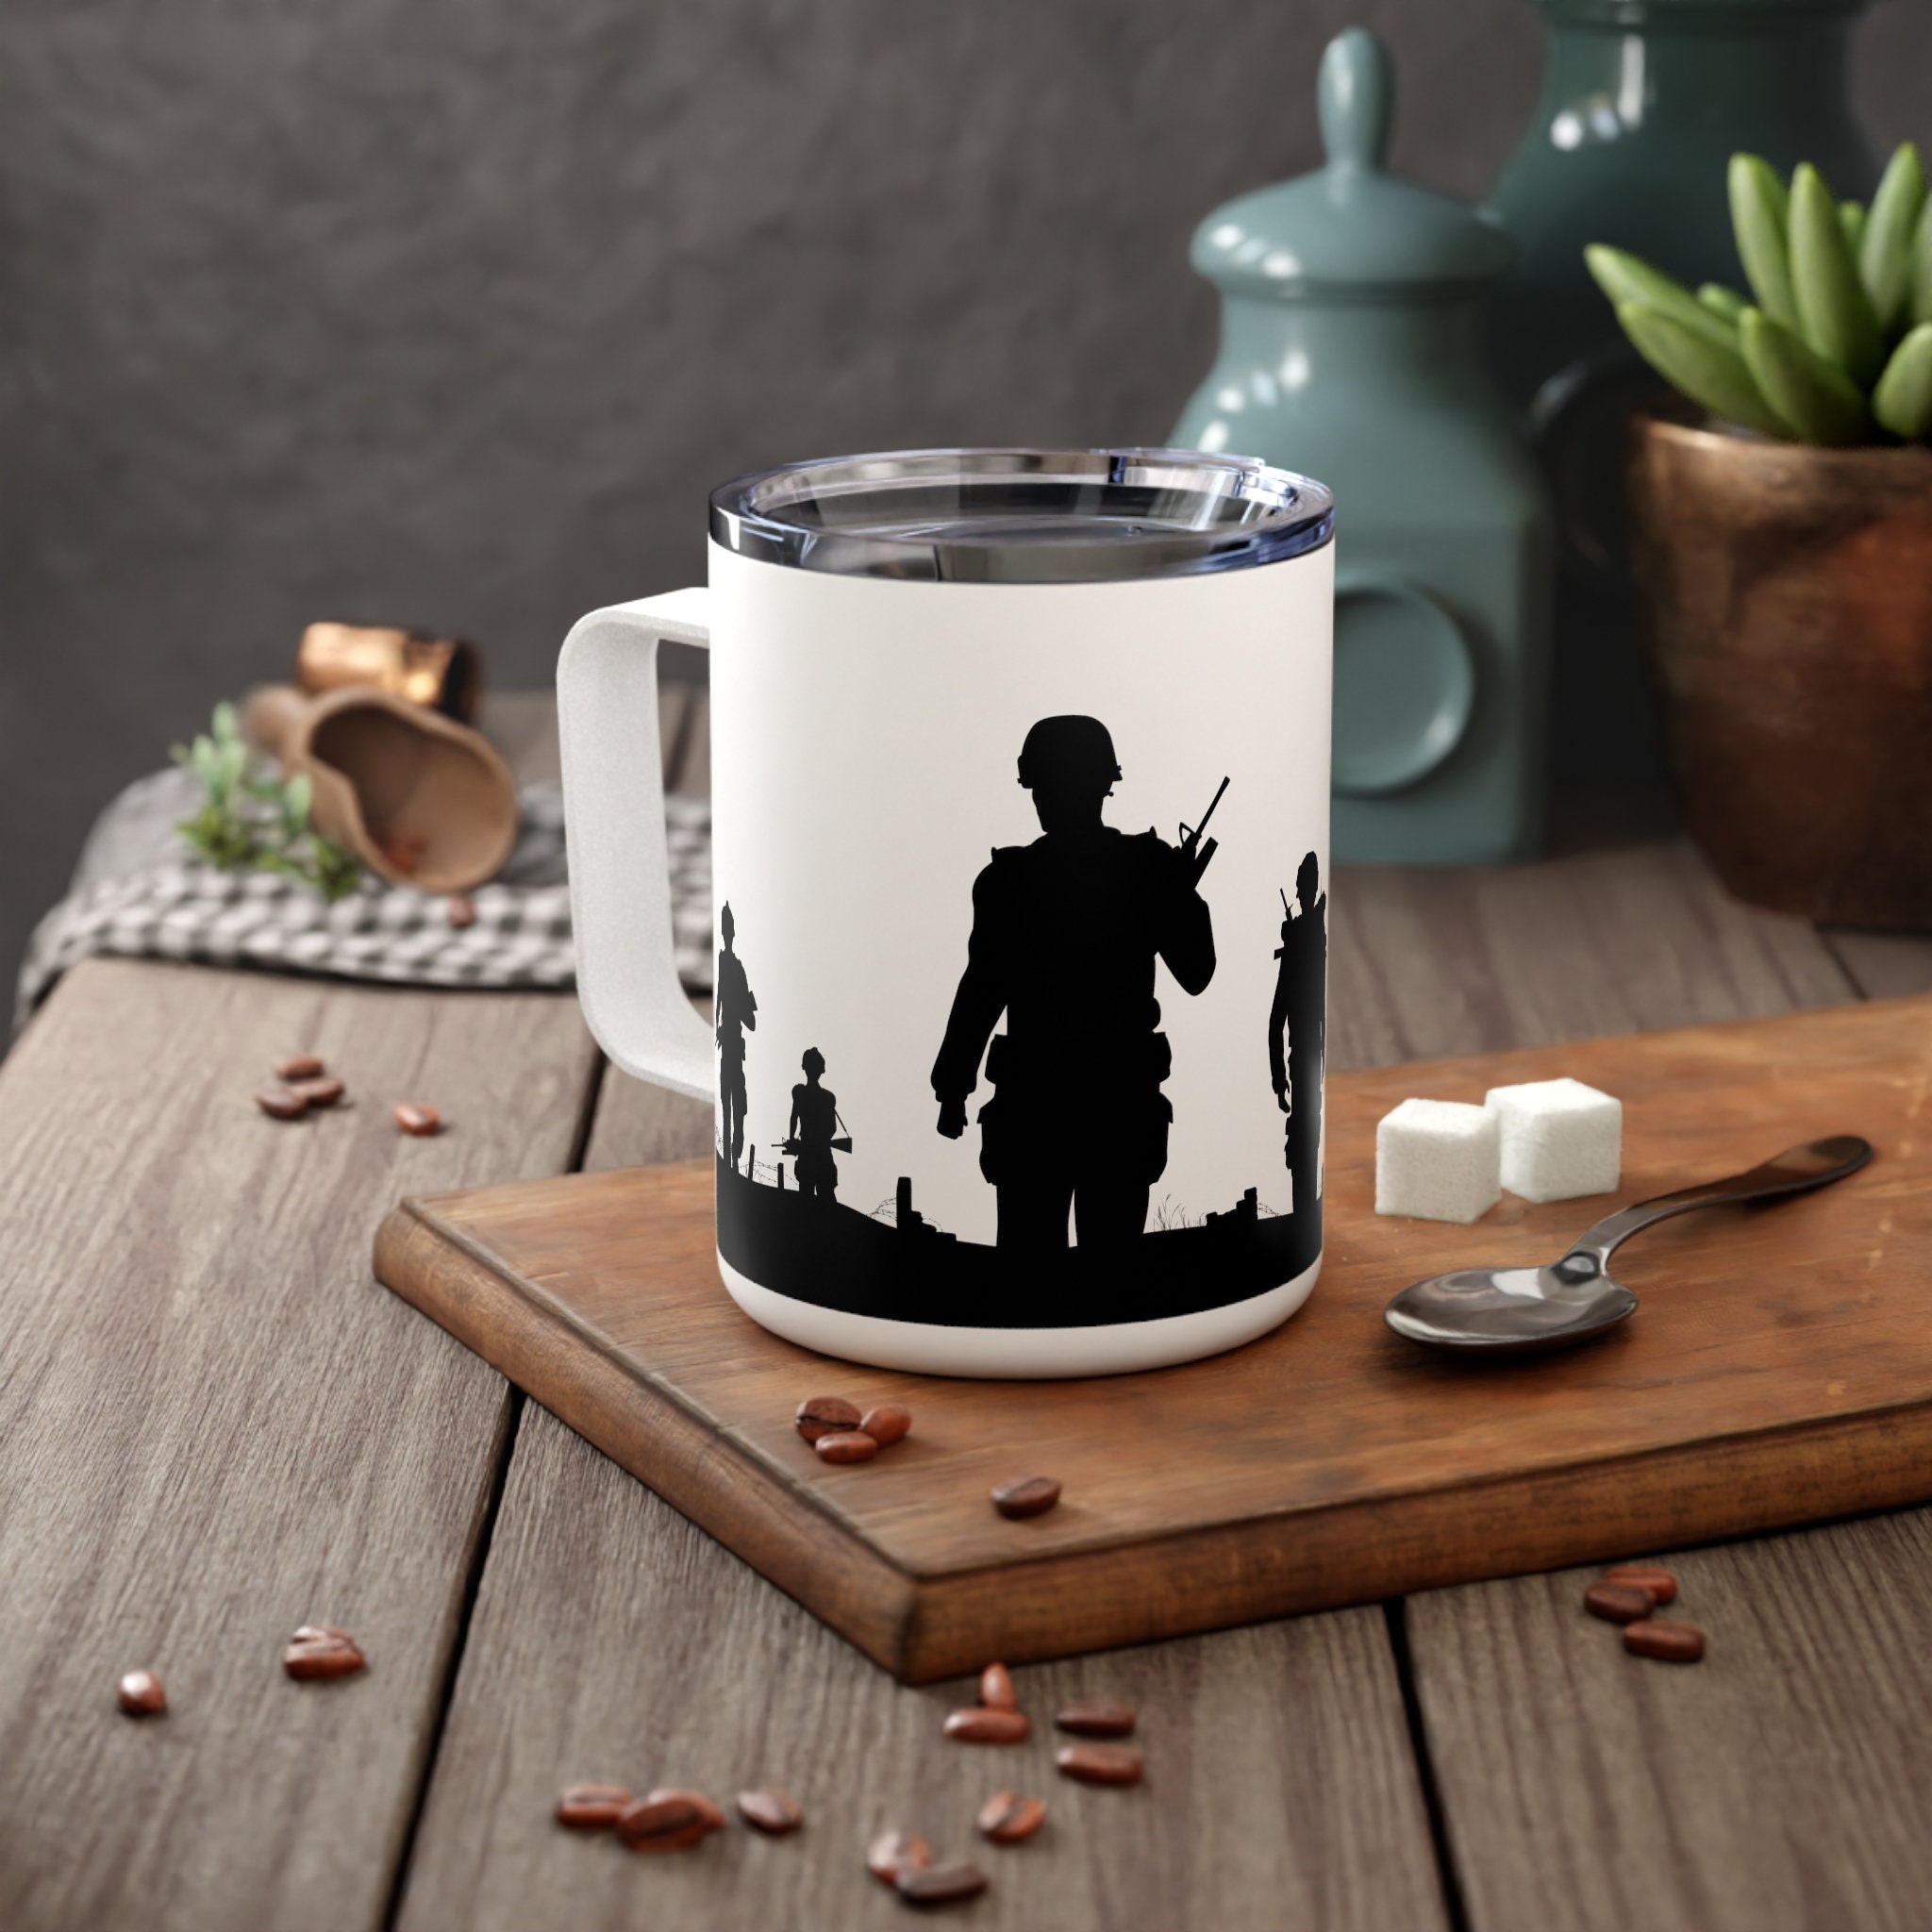 Special Forces 16 oz. Travel Coffee Mug